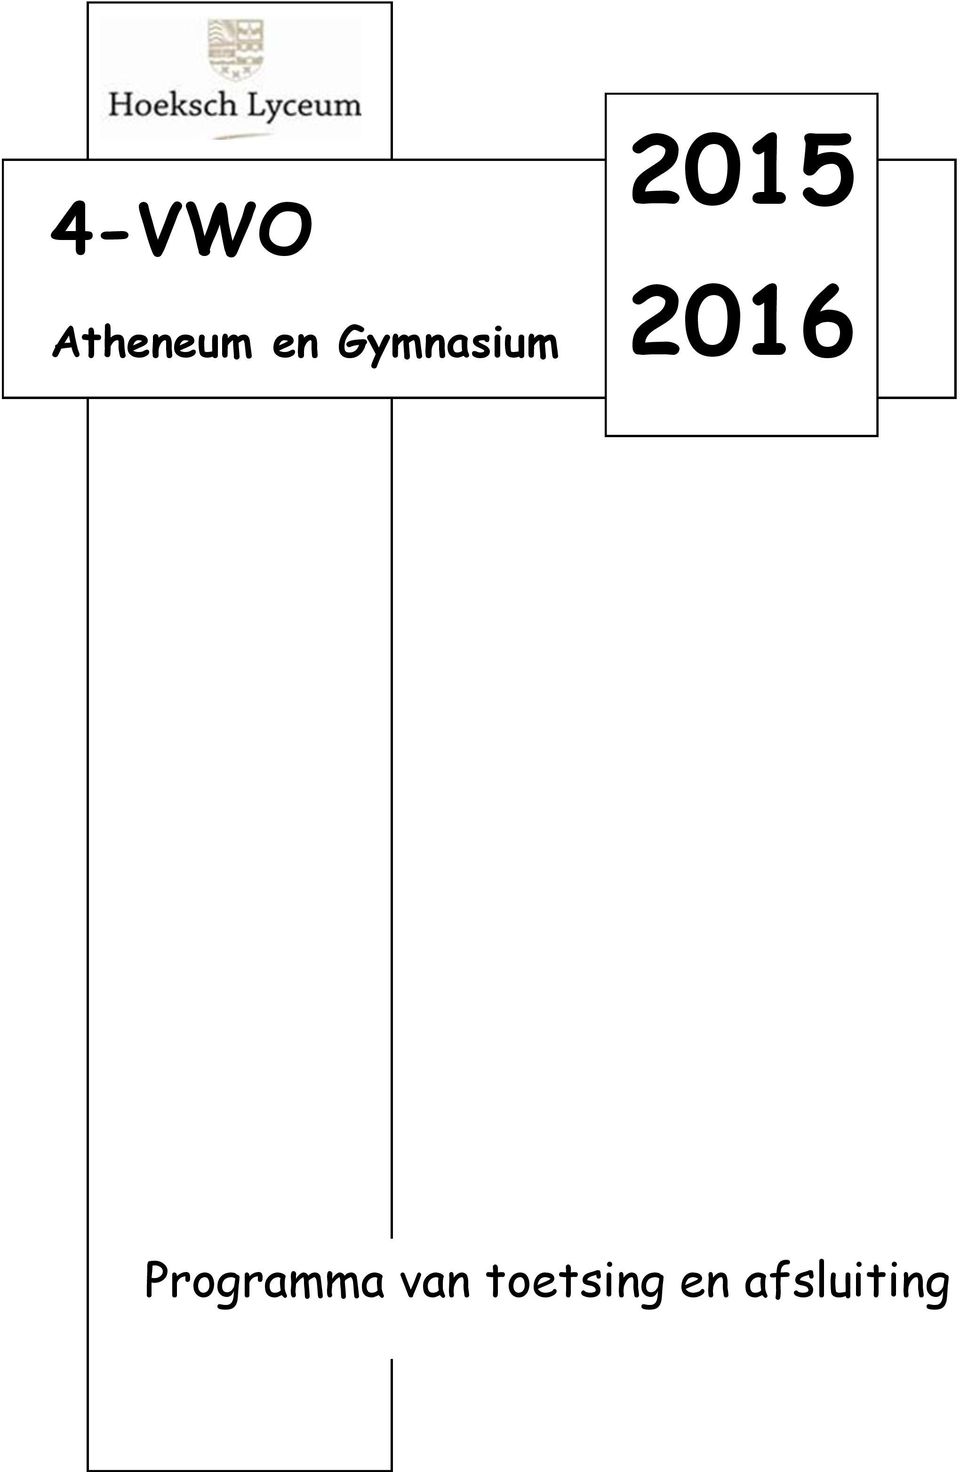 2016 Programma van